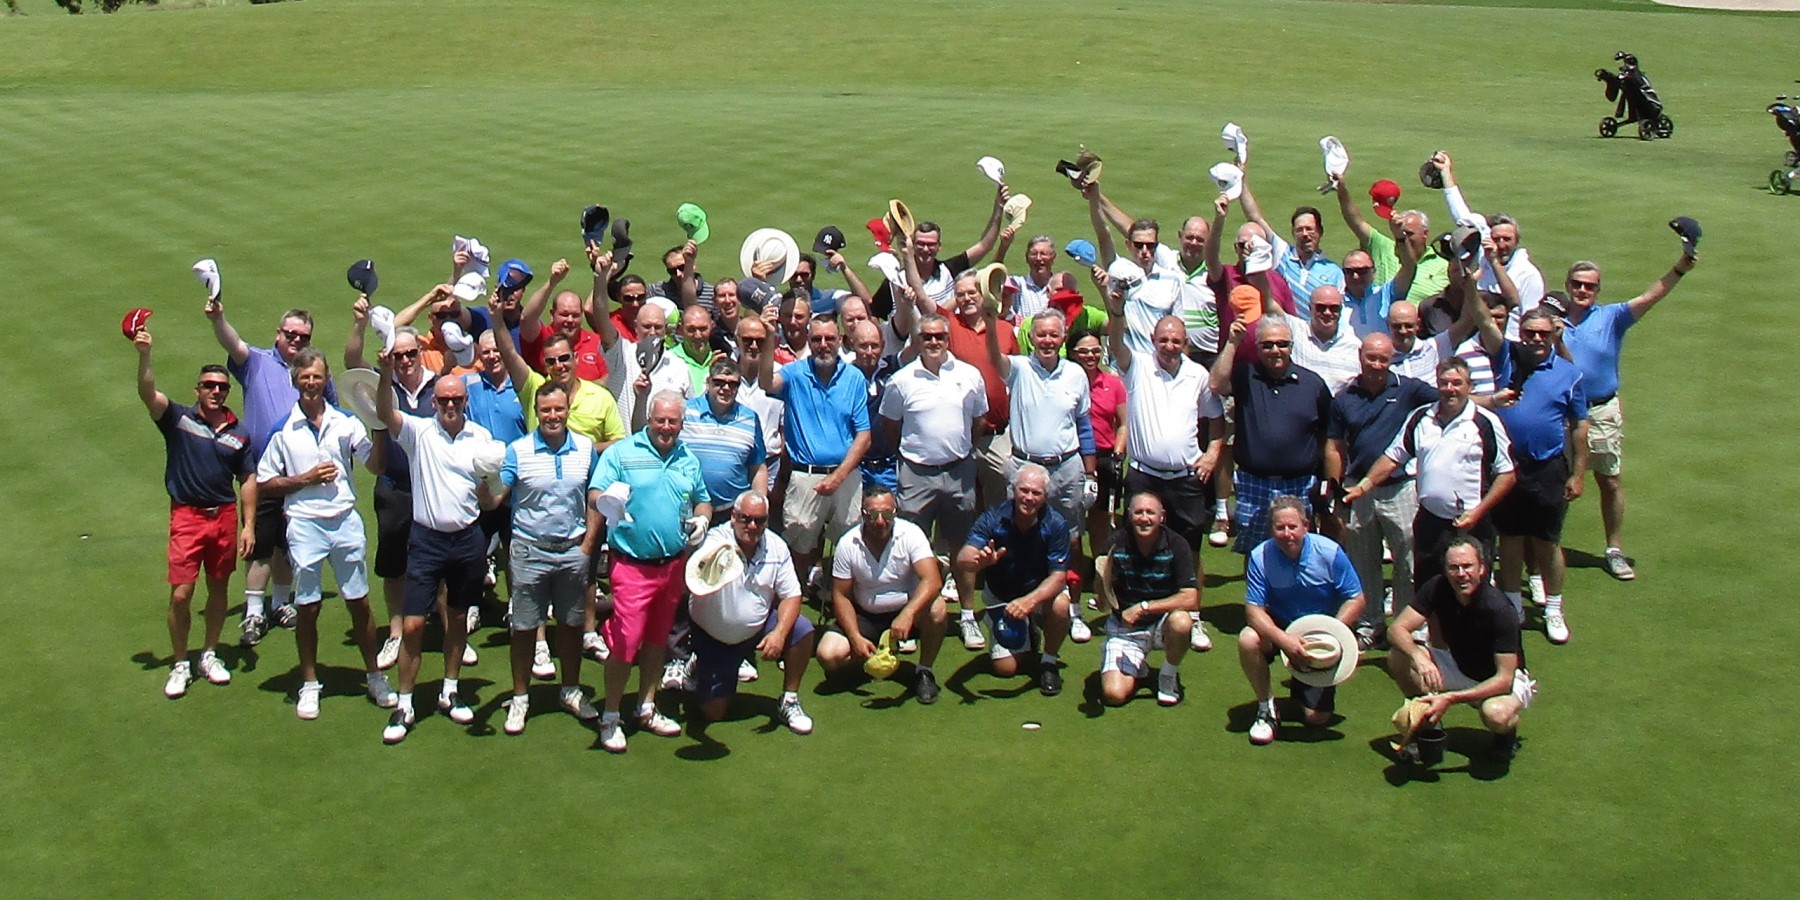 SGA Tour Golfers